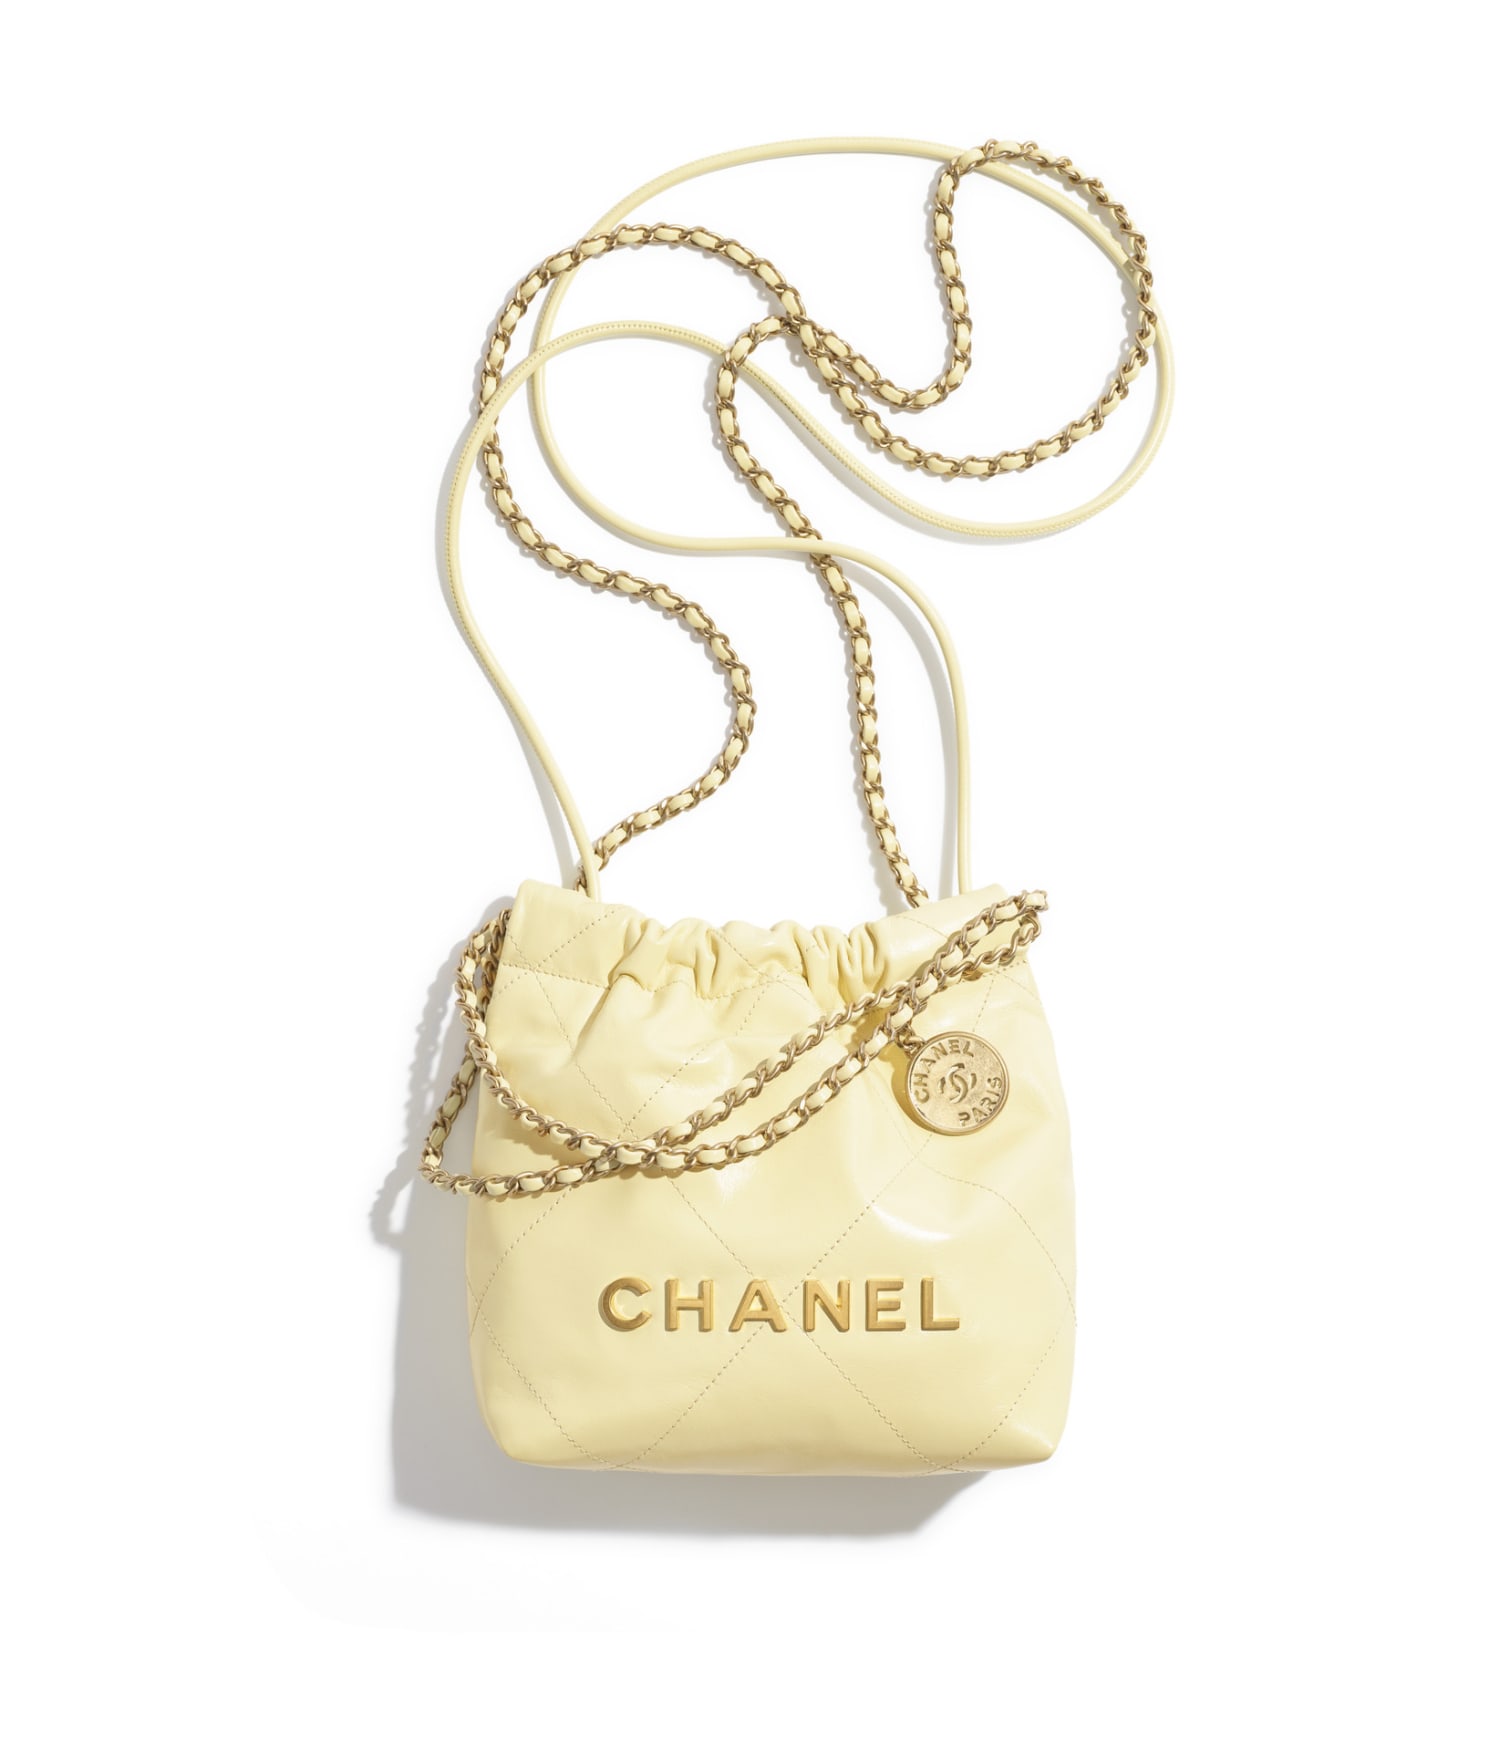 NEW Chanel 22 MINI BAG?! 🤔 Chanel Spring Summer 2023 Runway Bags